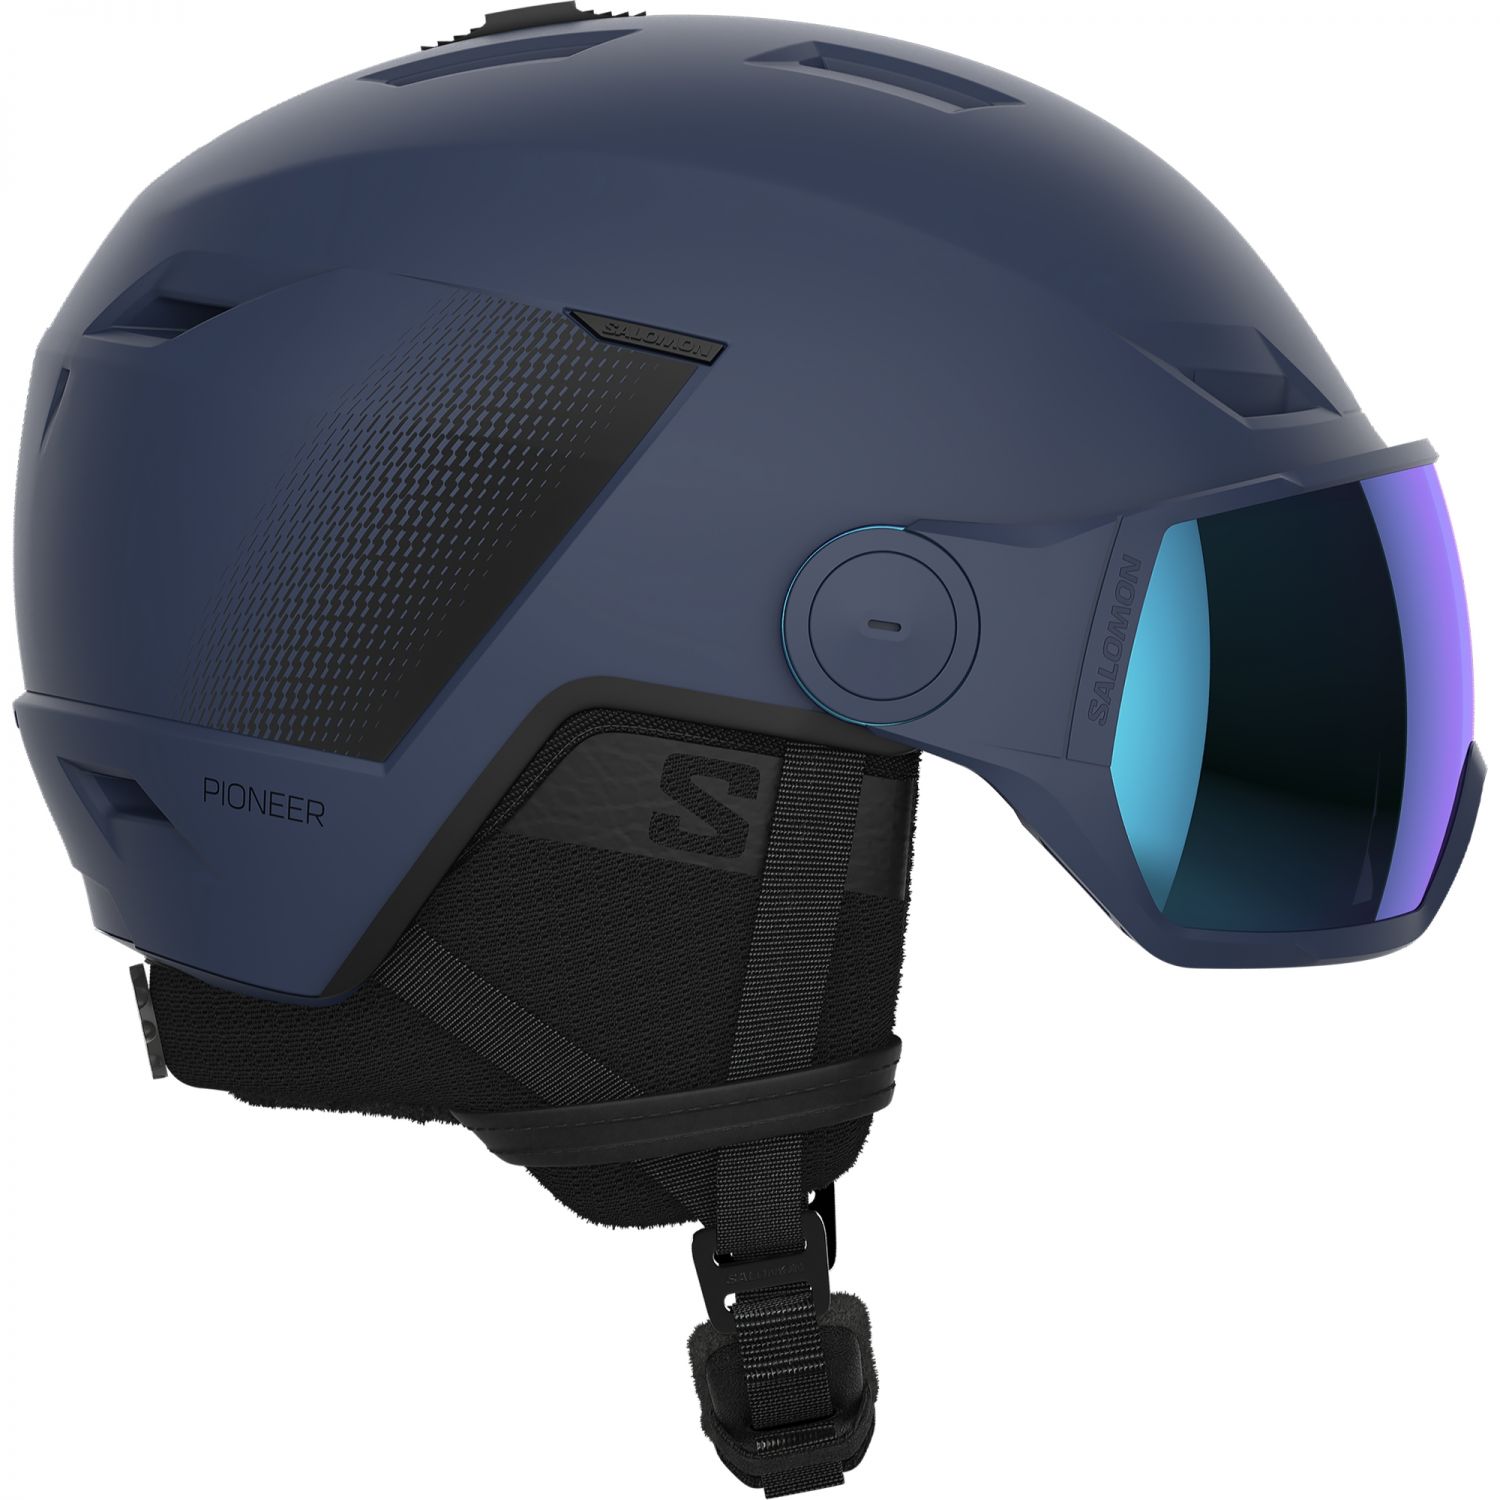 Salomon Pioneer LT Visor, casque de ski avec visière, bleu